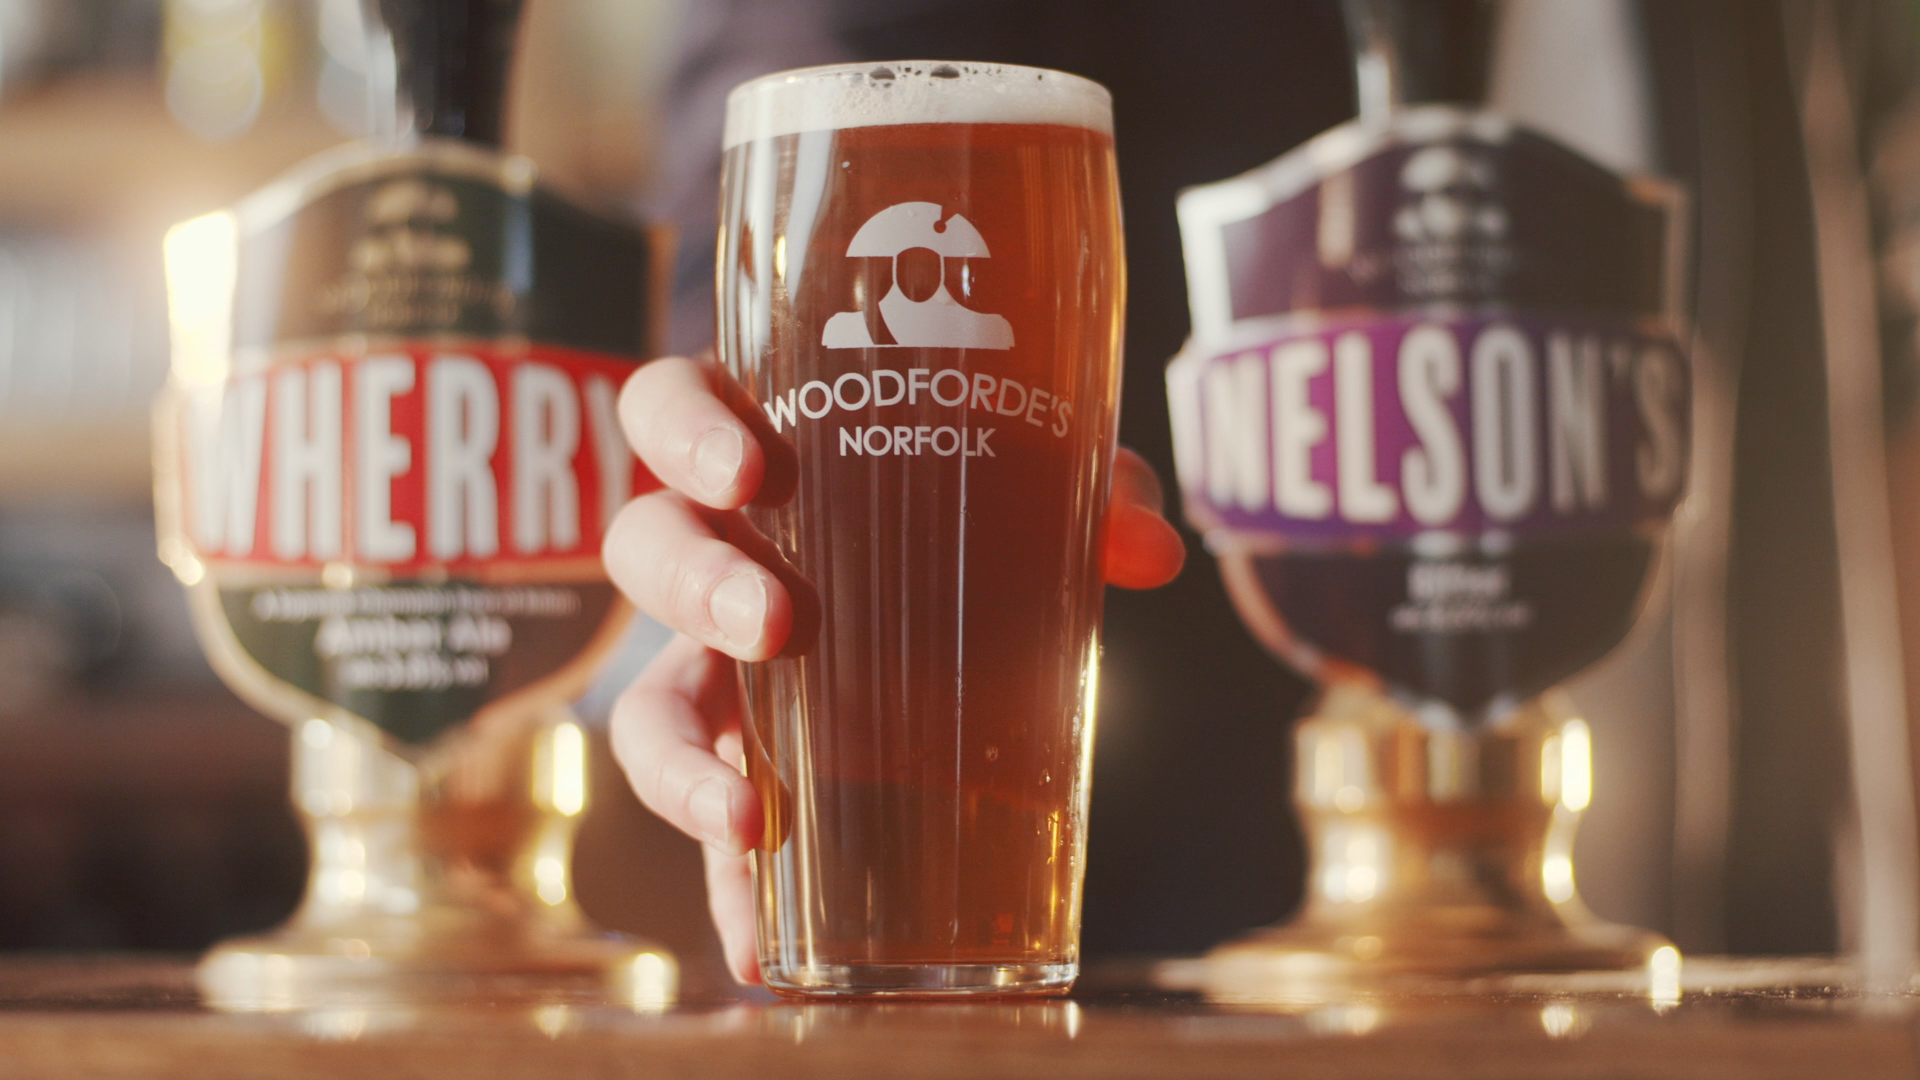 Woodforde’s Brewery